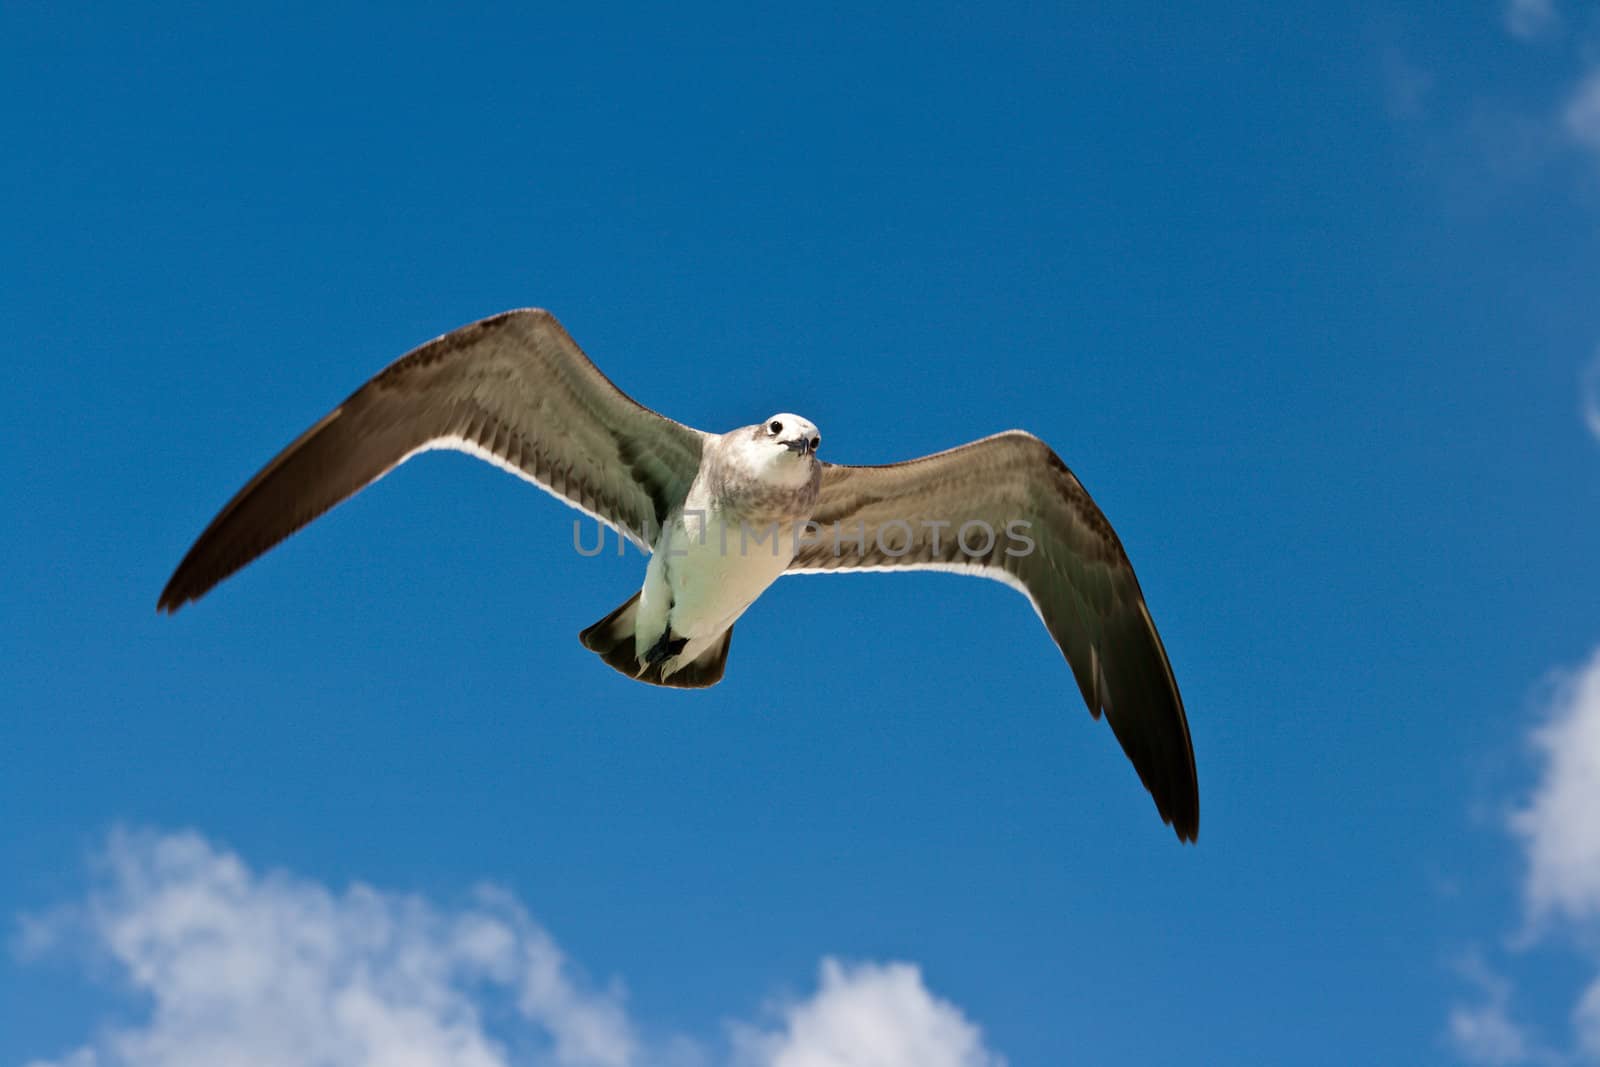 Seagull flying by dimol